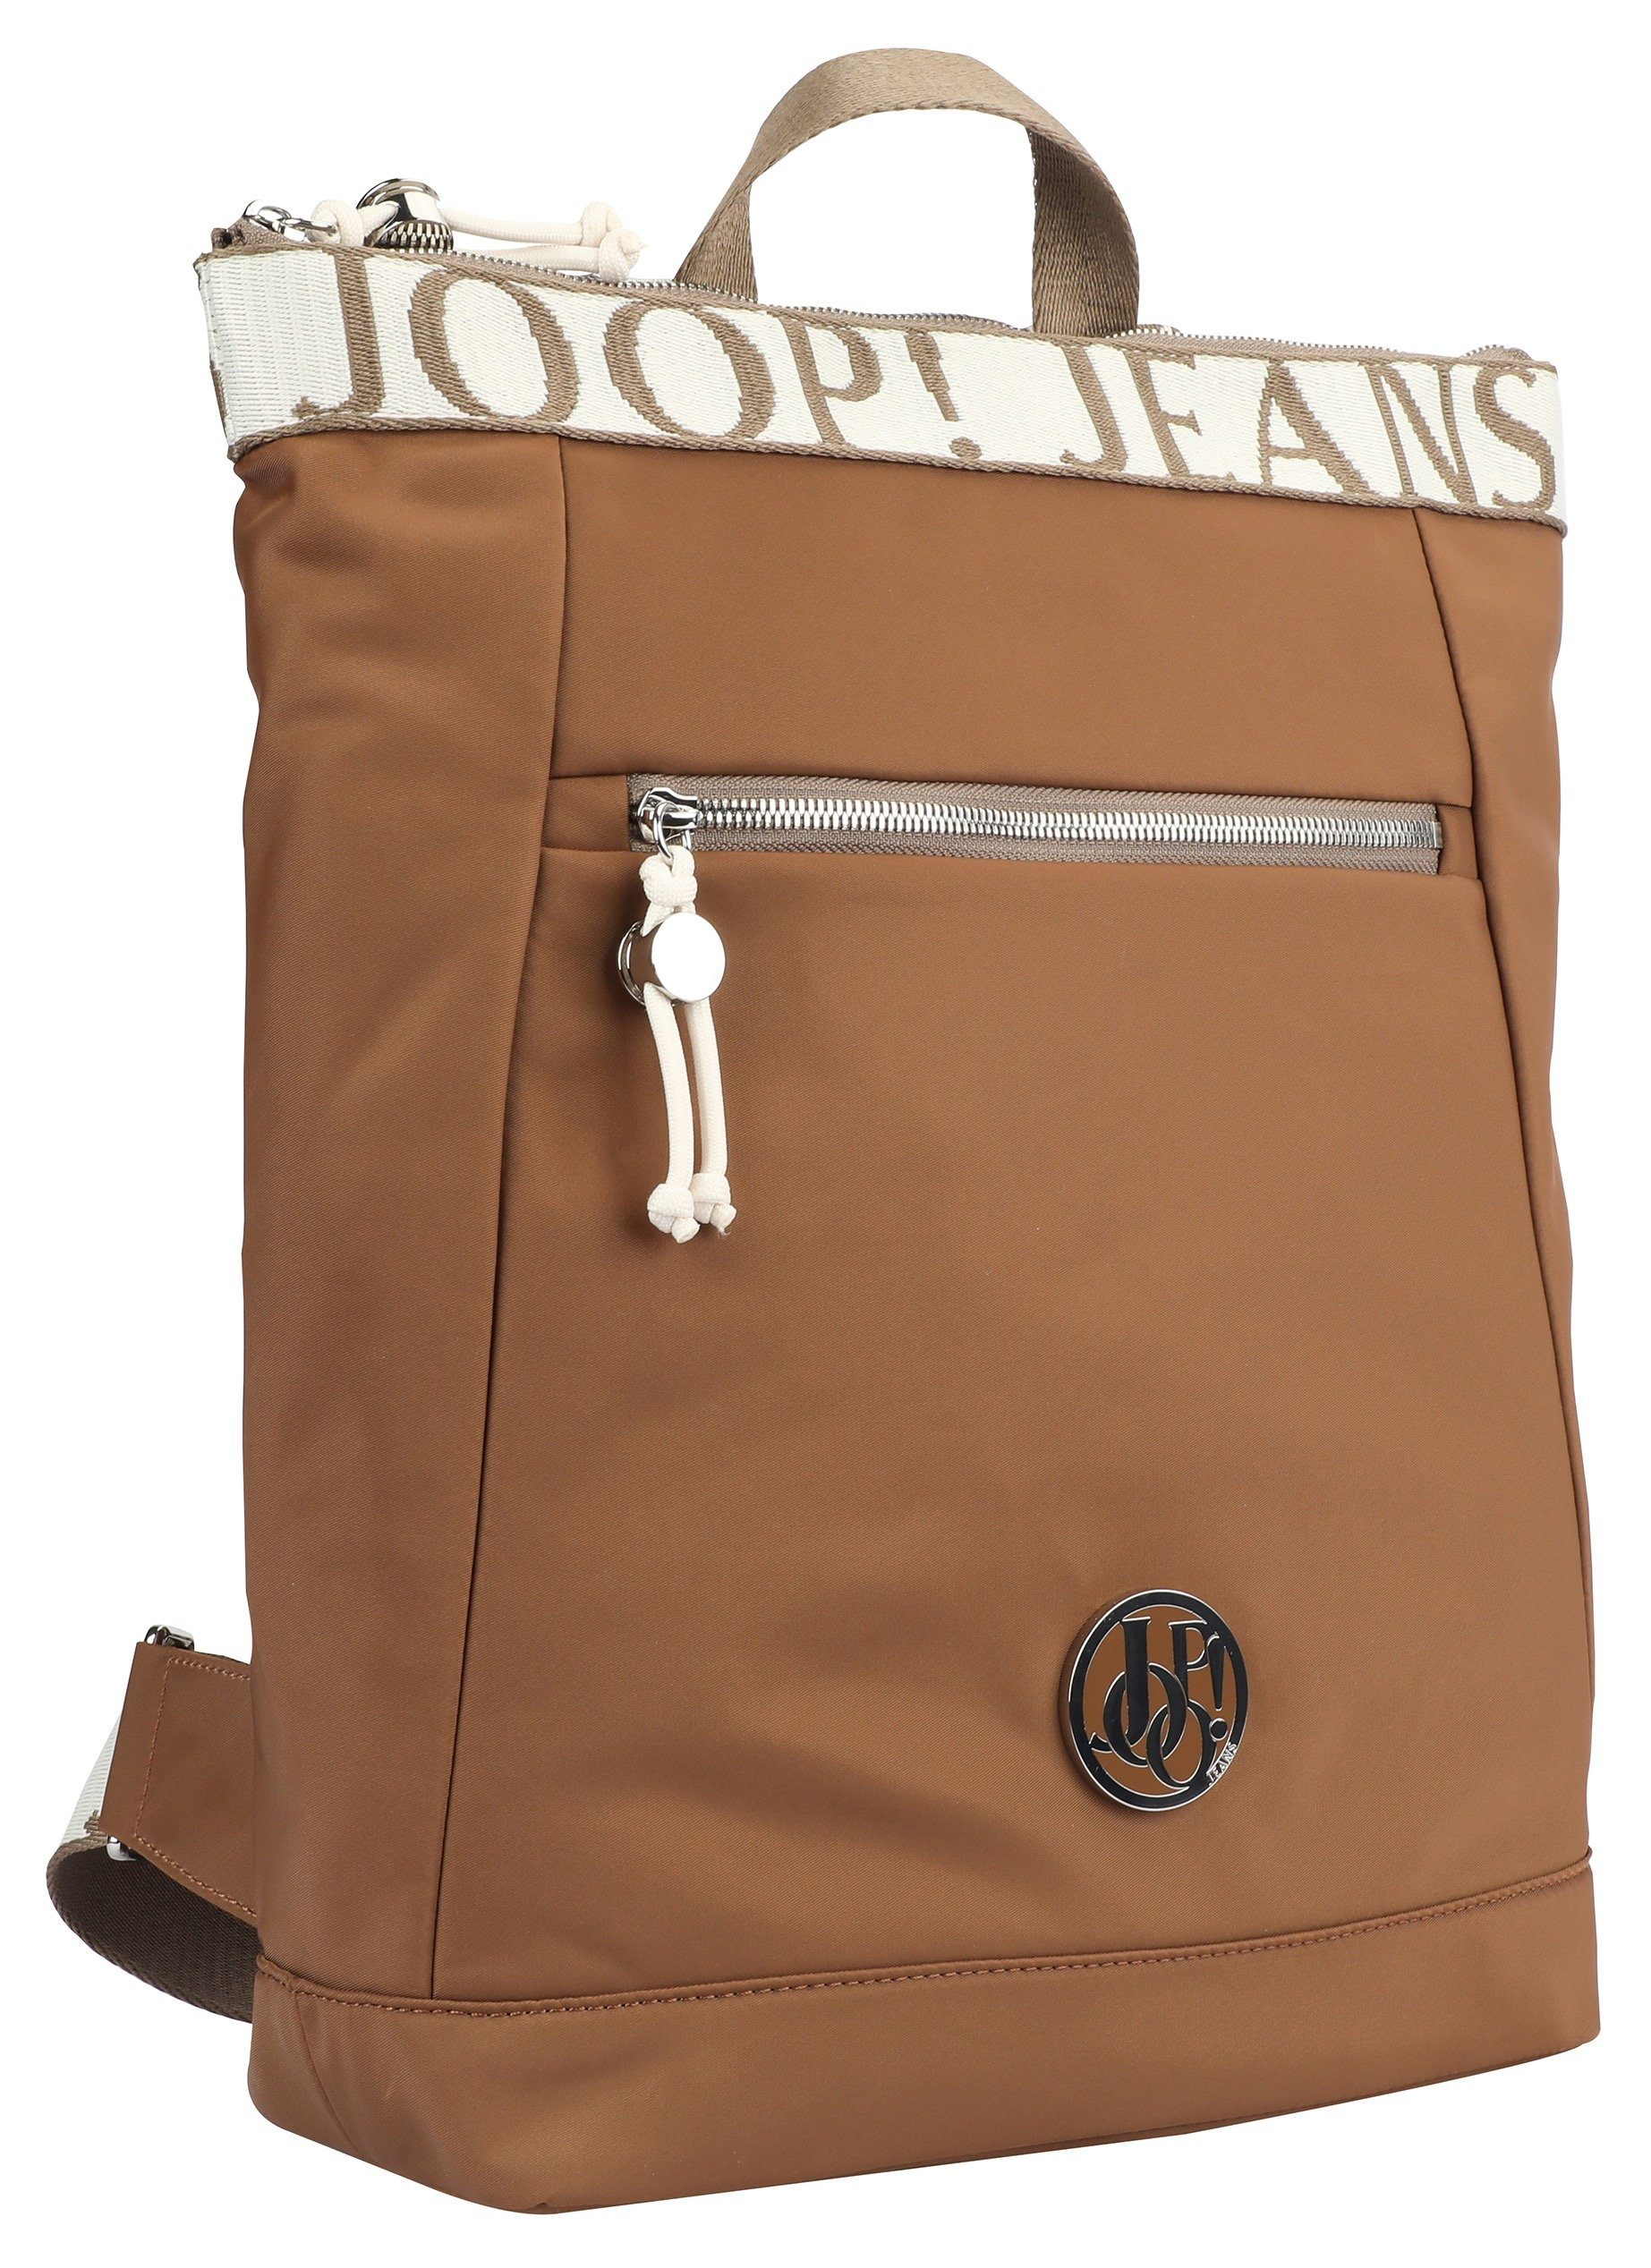 Jeans den Trageriemen Joop! braun mit Cityrucksack backpack elva auf Logo lietissimo Schriftzug Joop lvz,